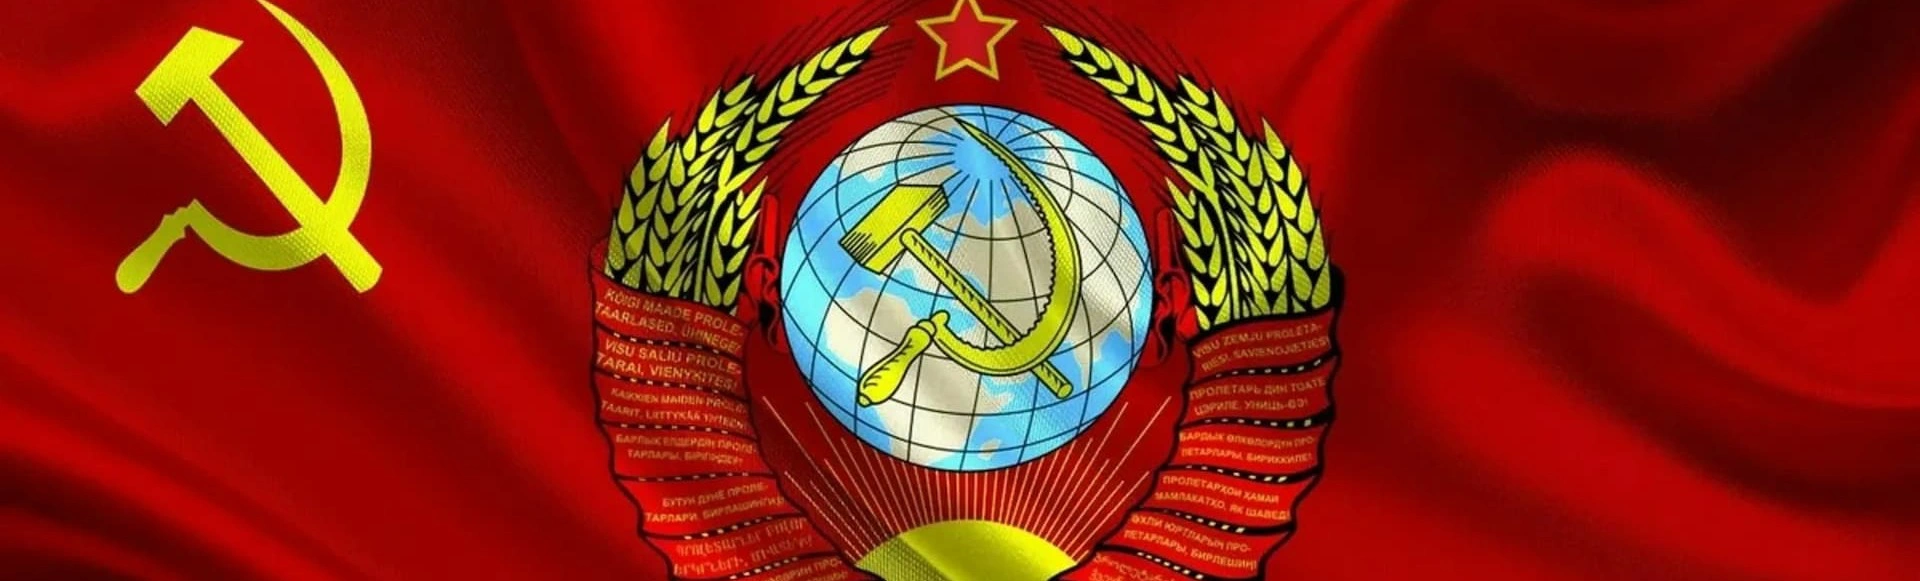 Хит-парад СССР